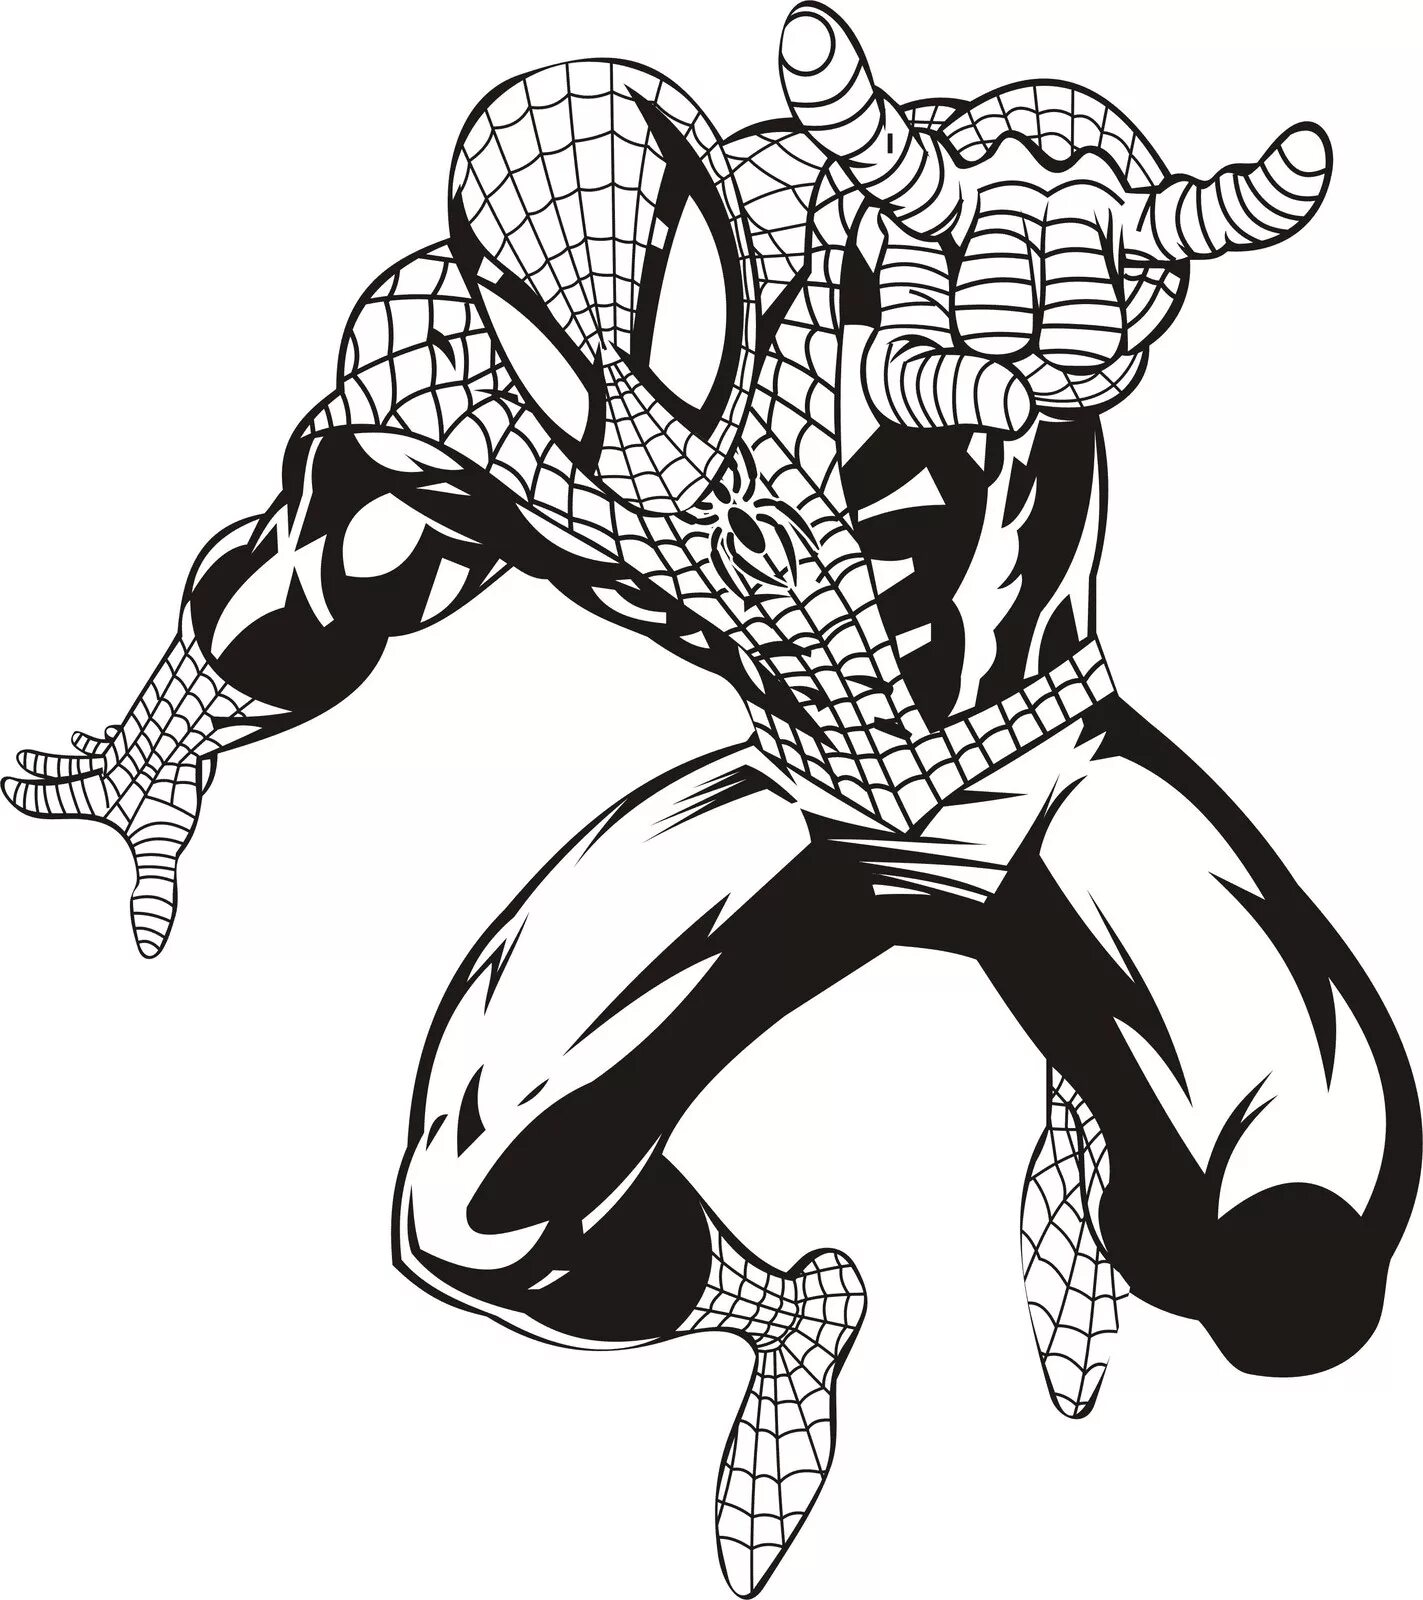 Раскраски spider man. Раскраска Супергерои Марвел человек паук. Раскраска Супергерои Марвел черный человек паук. Расскраскачелдовек паук. Разукраскичеловек паук.